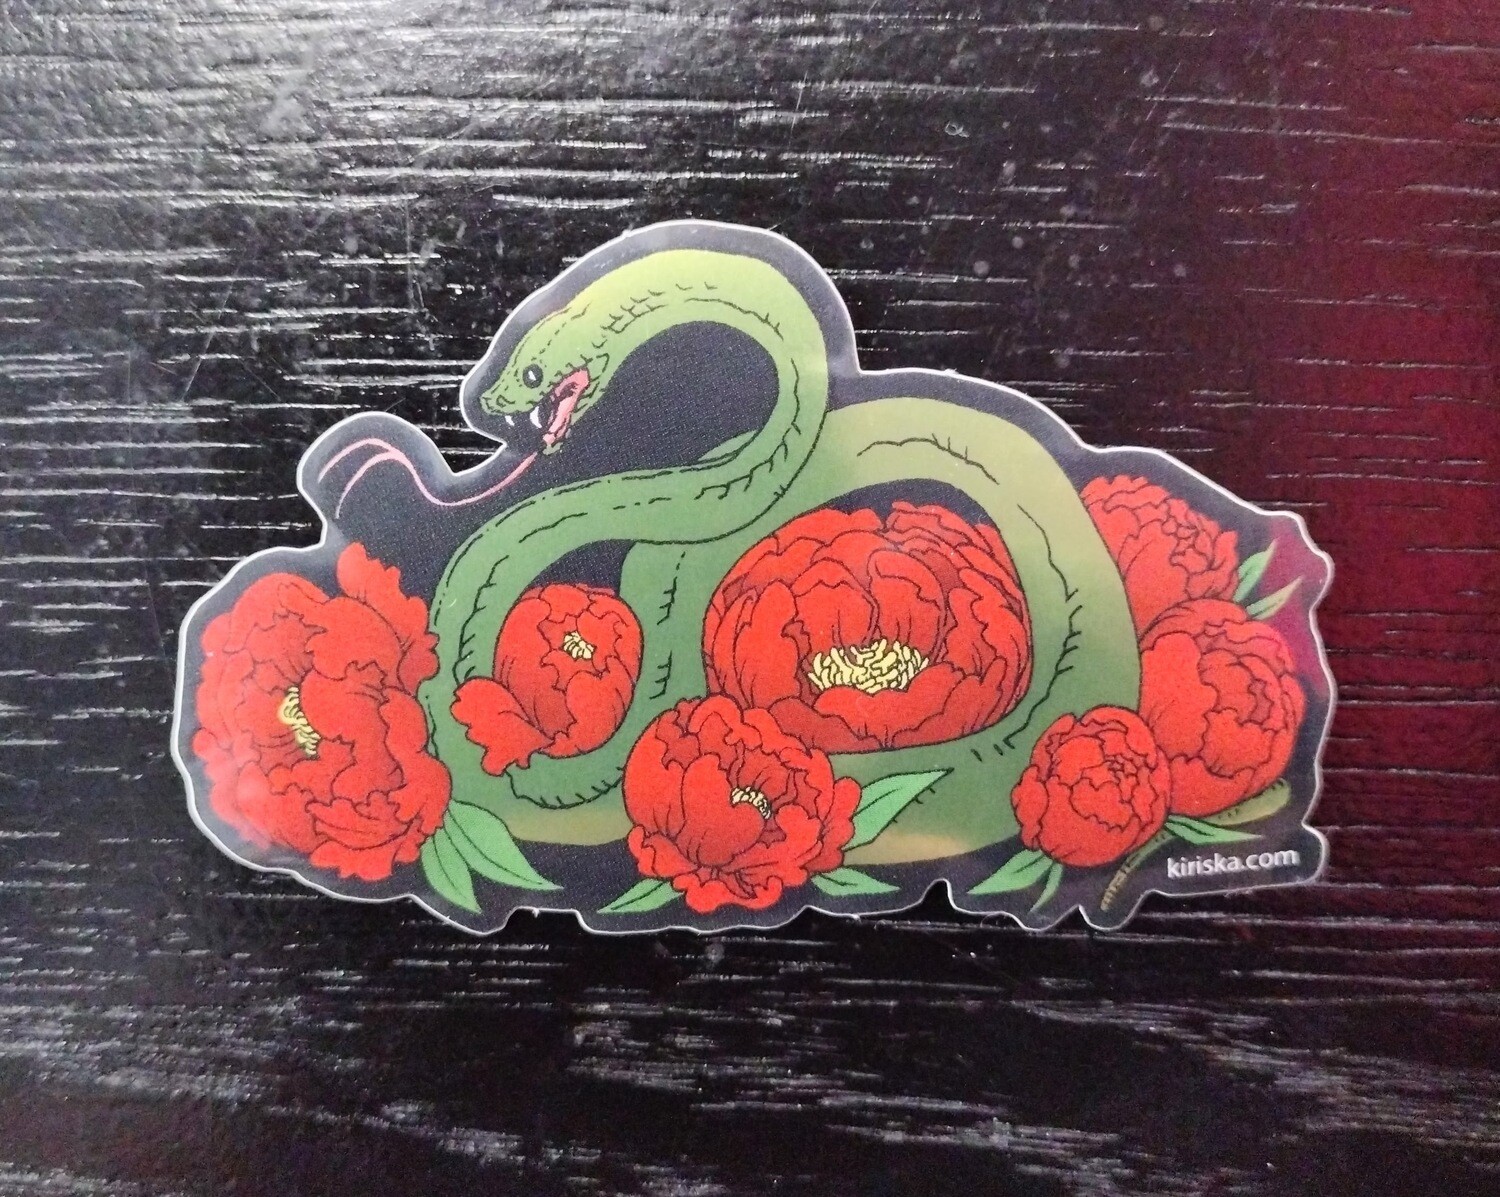 Golden Snake - Sticker by Kiriska